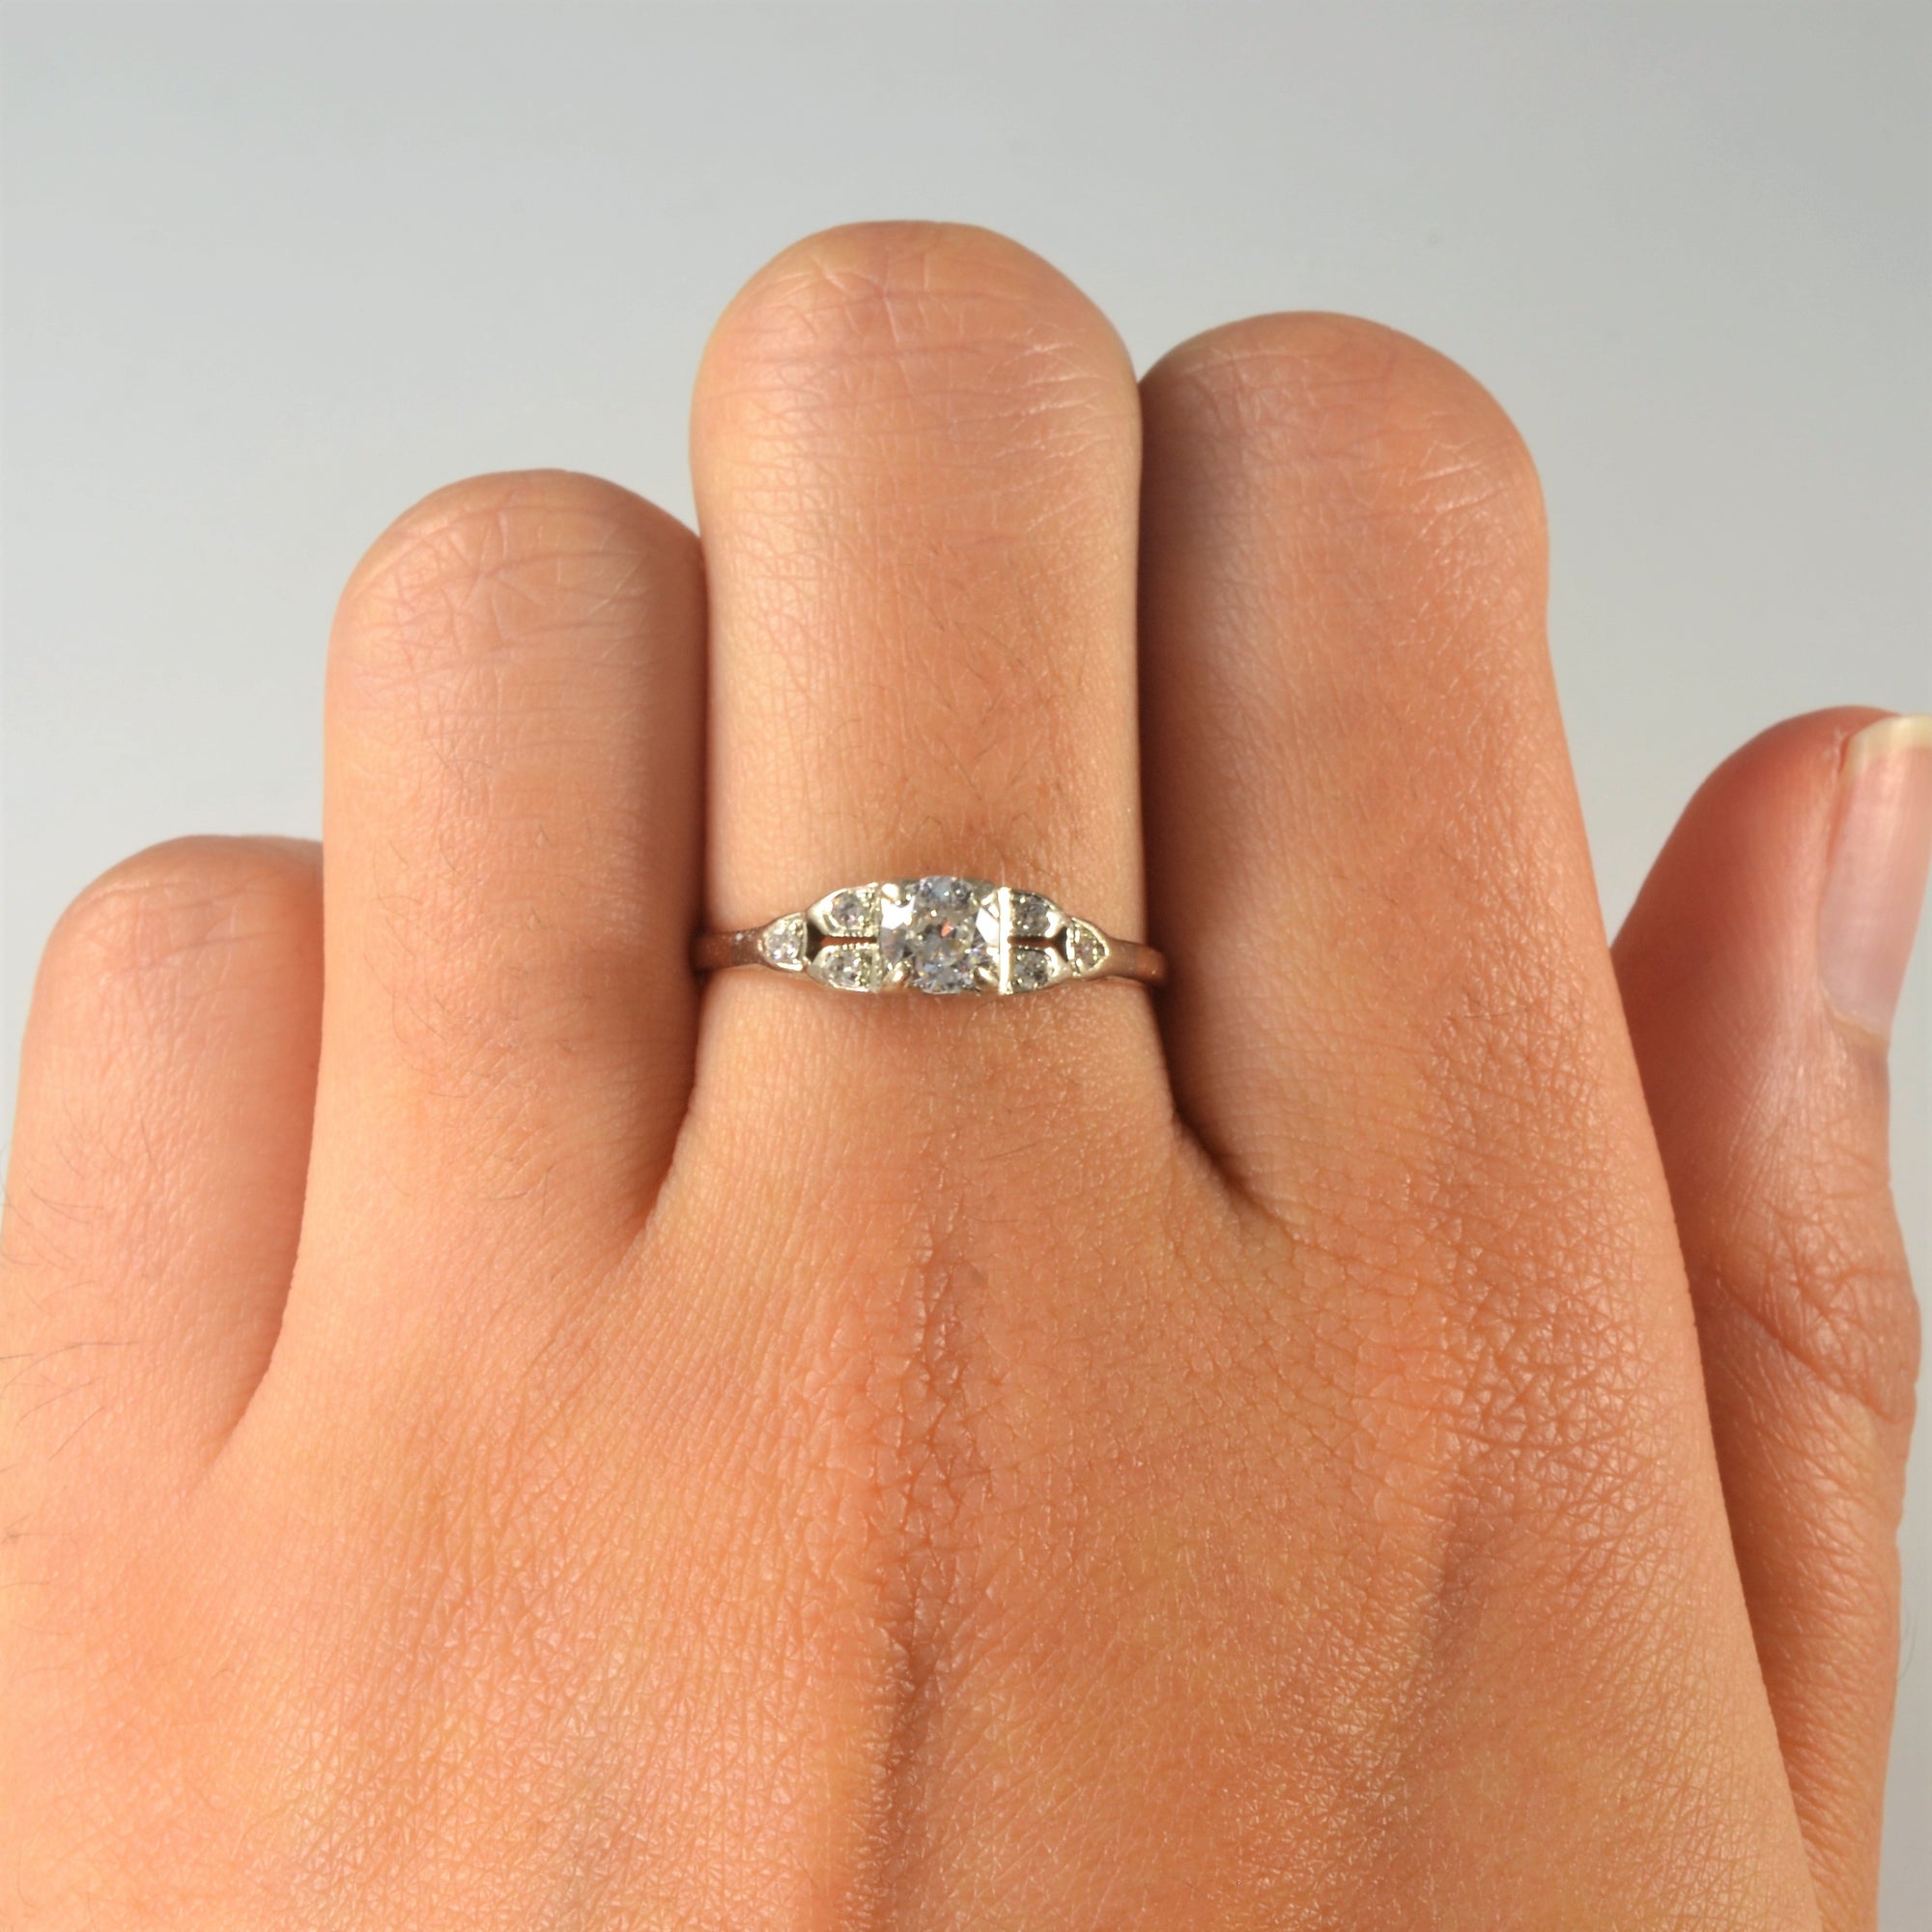 1930s Diamond Engagement Ring | 0.39ctw | SZ 7.5 |